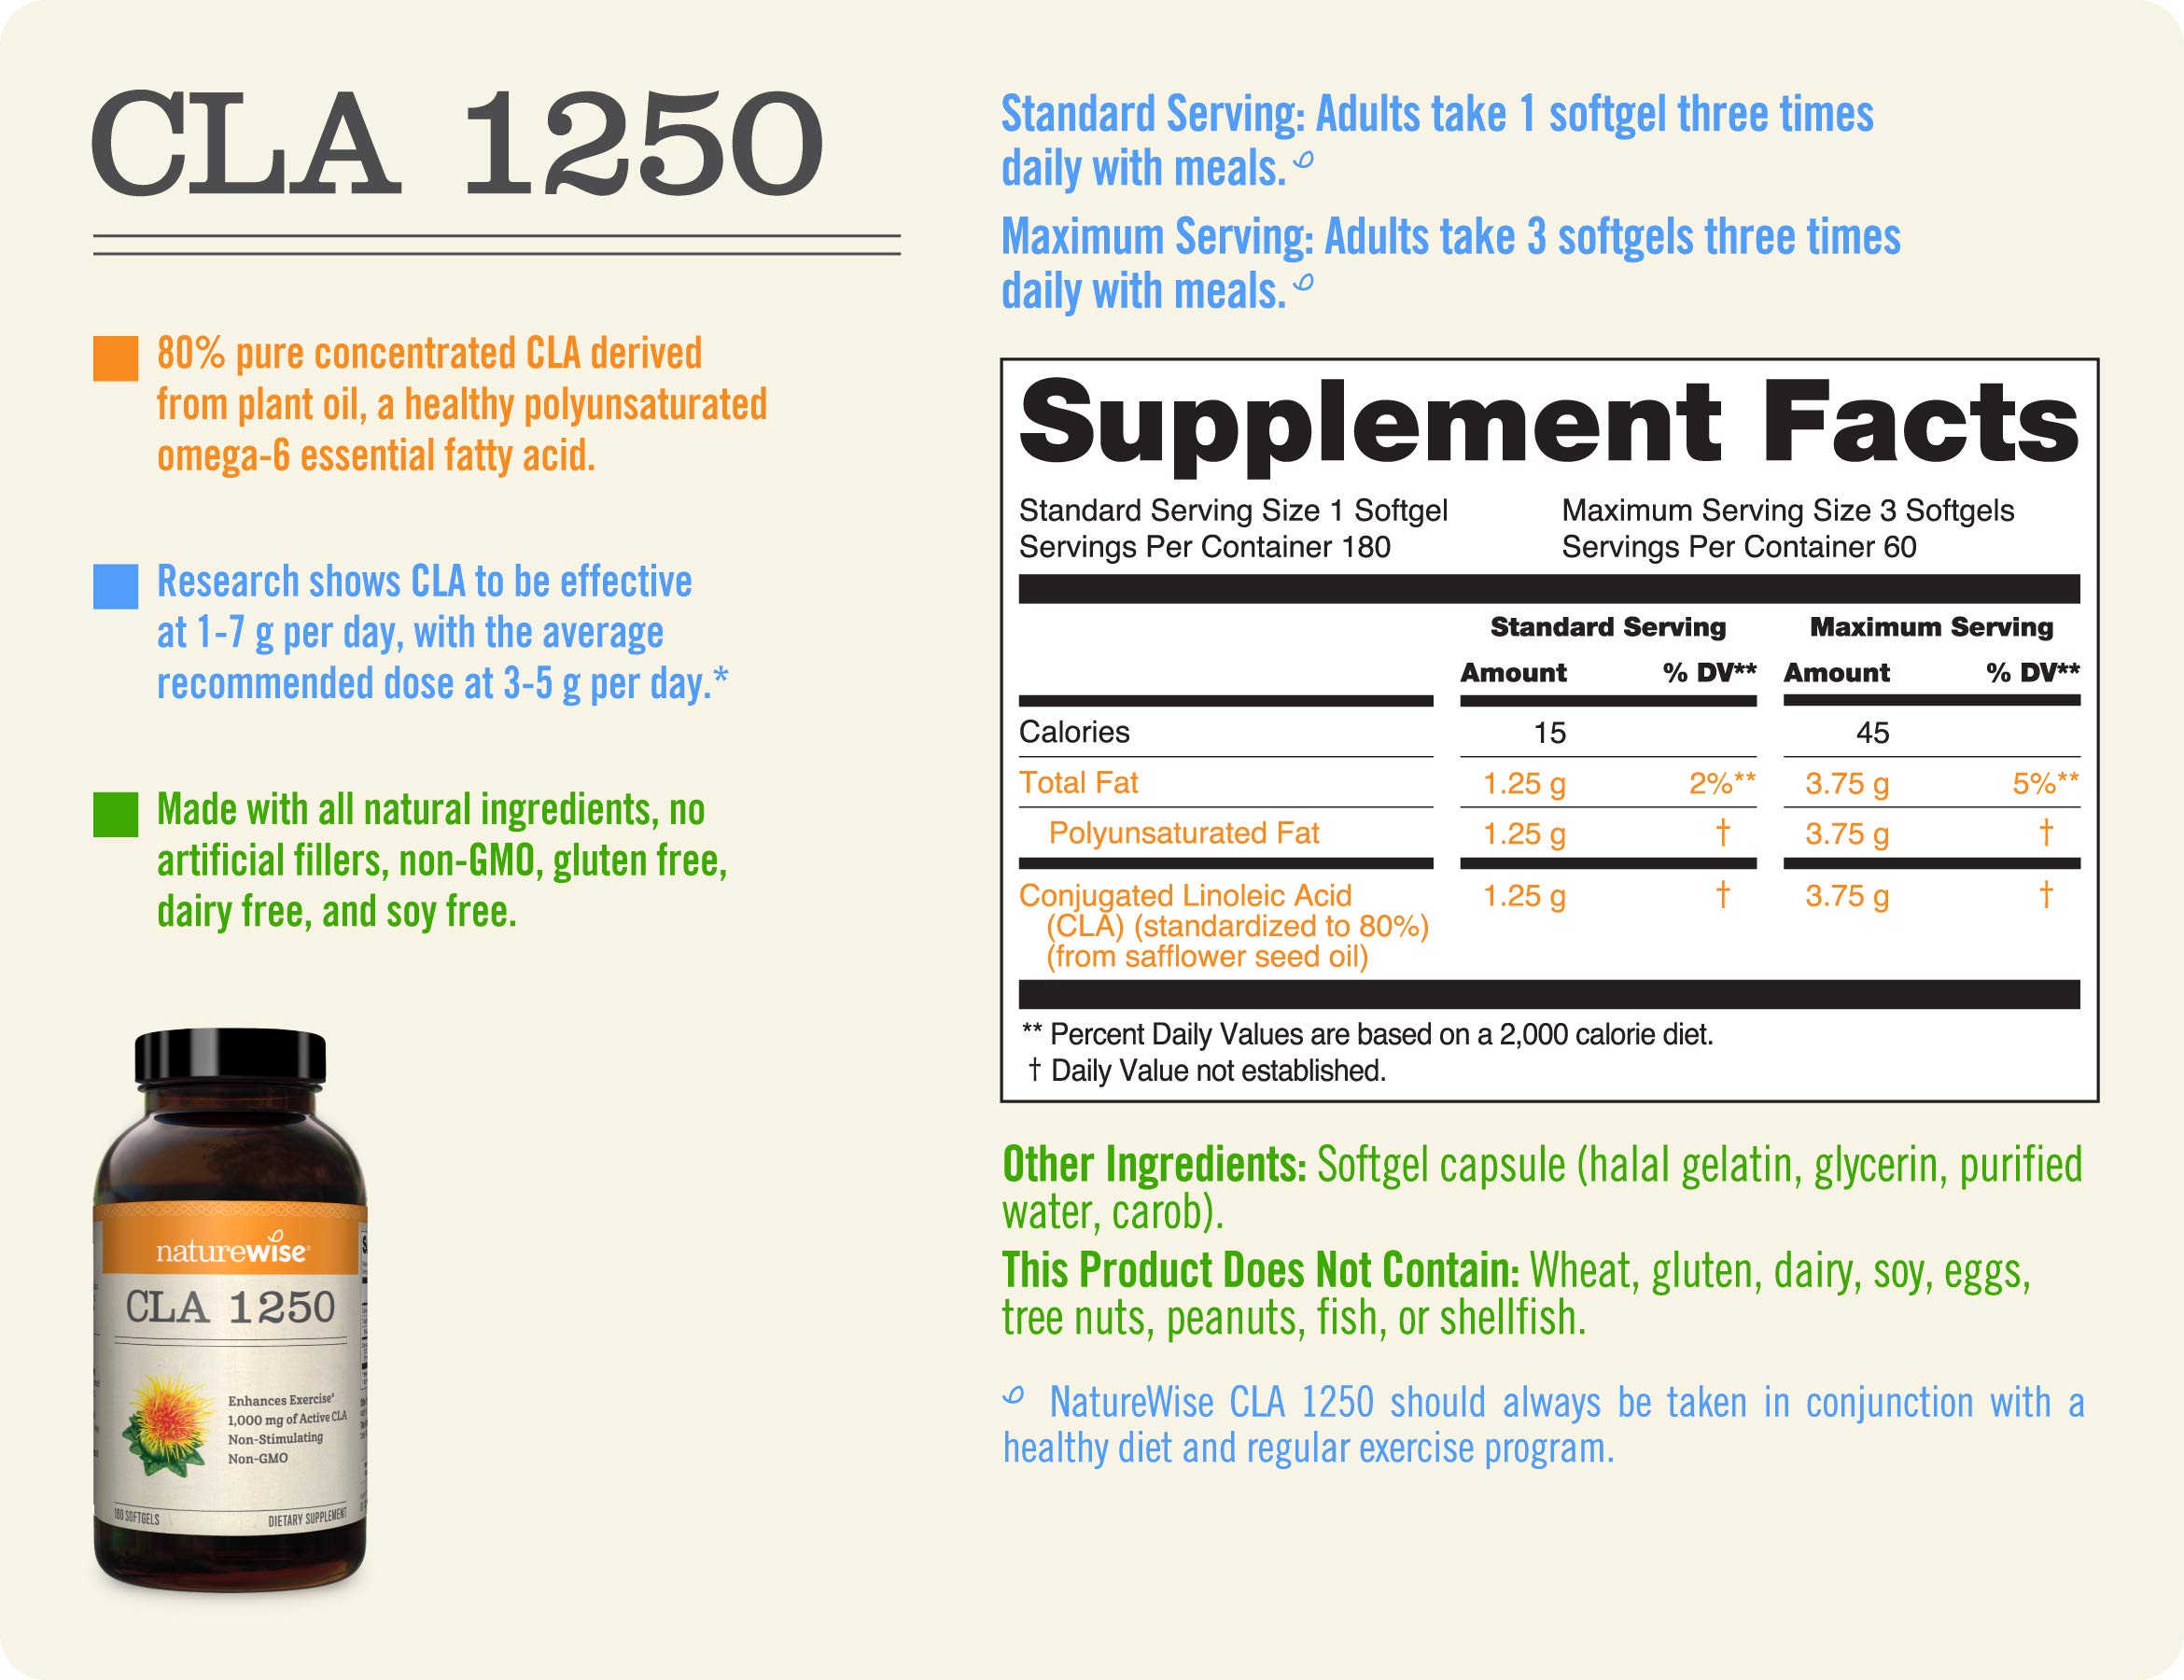 NatureWise Vitamin D3 5000iu (125 mcg) 1 Year Supply CLA 1250 Natural Exercise Enhancement